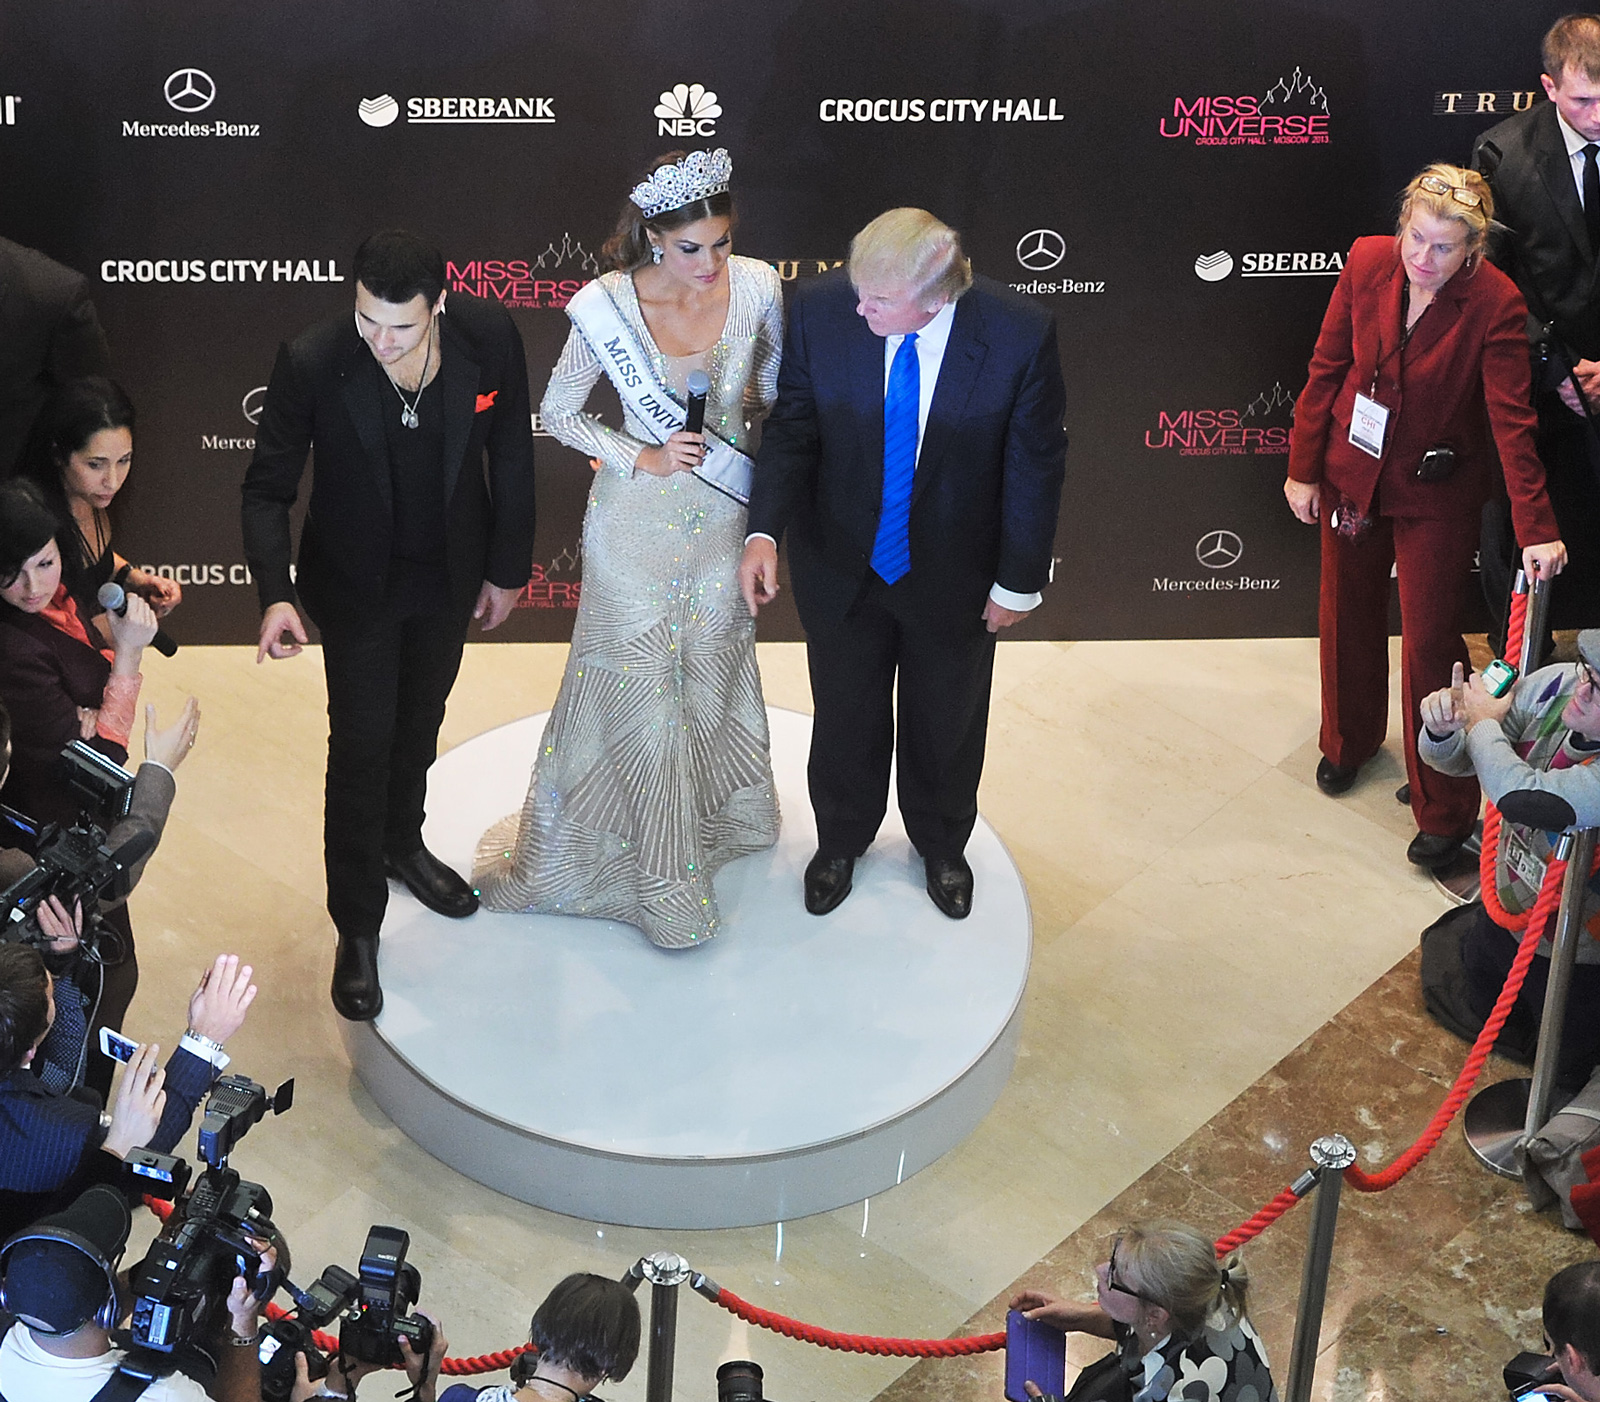 Singer Emin Agalarov, Gabriela Isler (Miss Venezuela 2013), and Donald Trump, Moscow, November 9, 2013